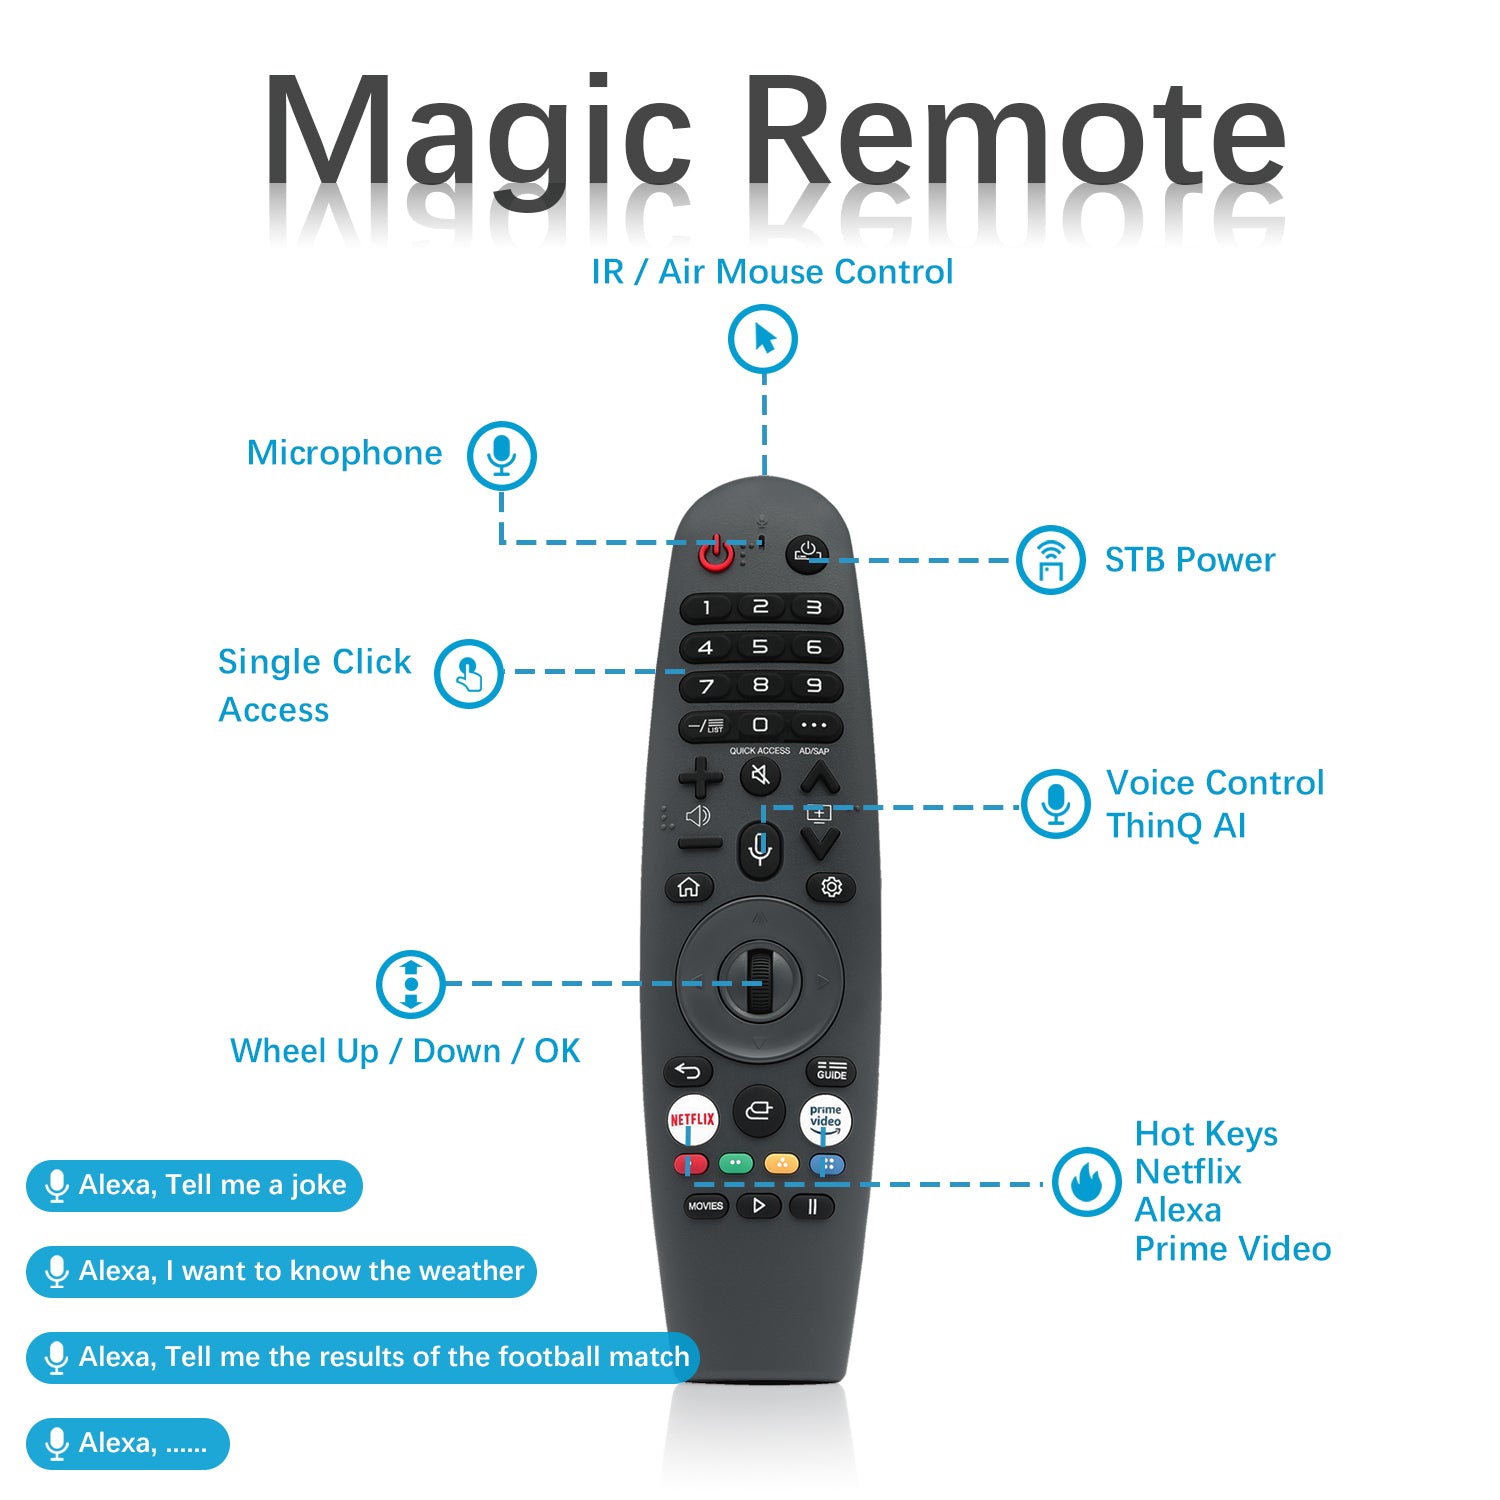 LG Magic Remote - WebOS 5 vs WebOS 6 